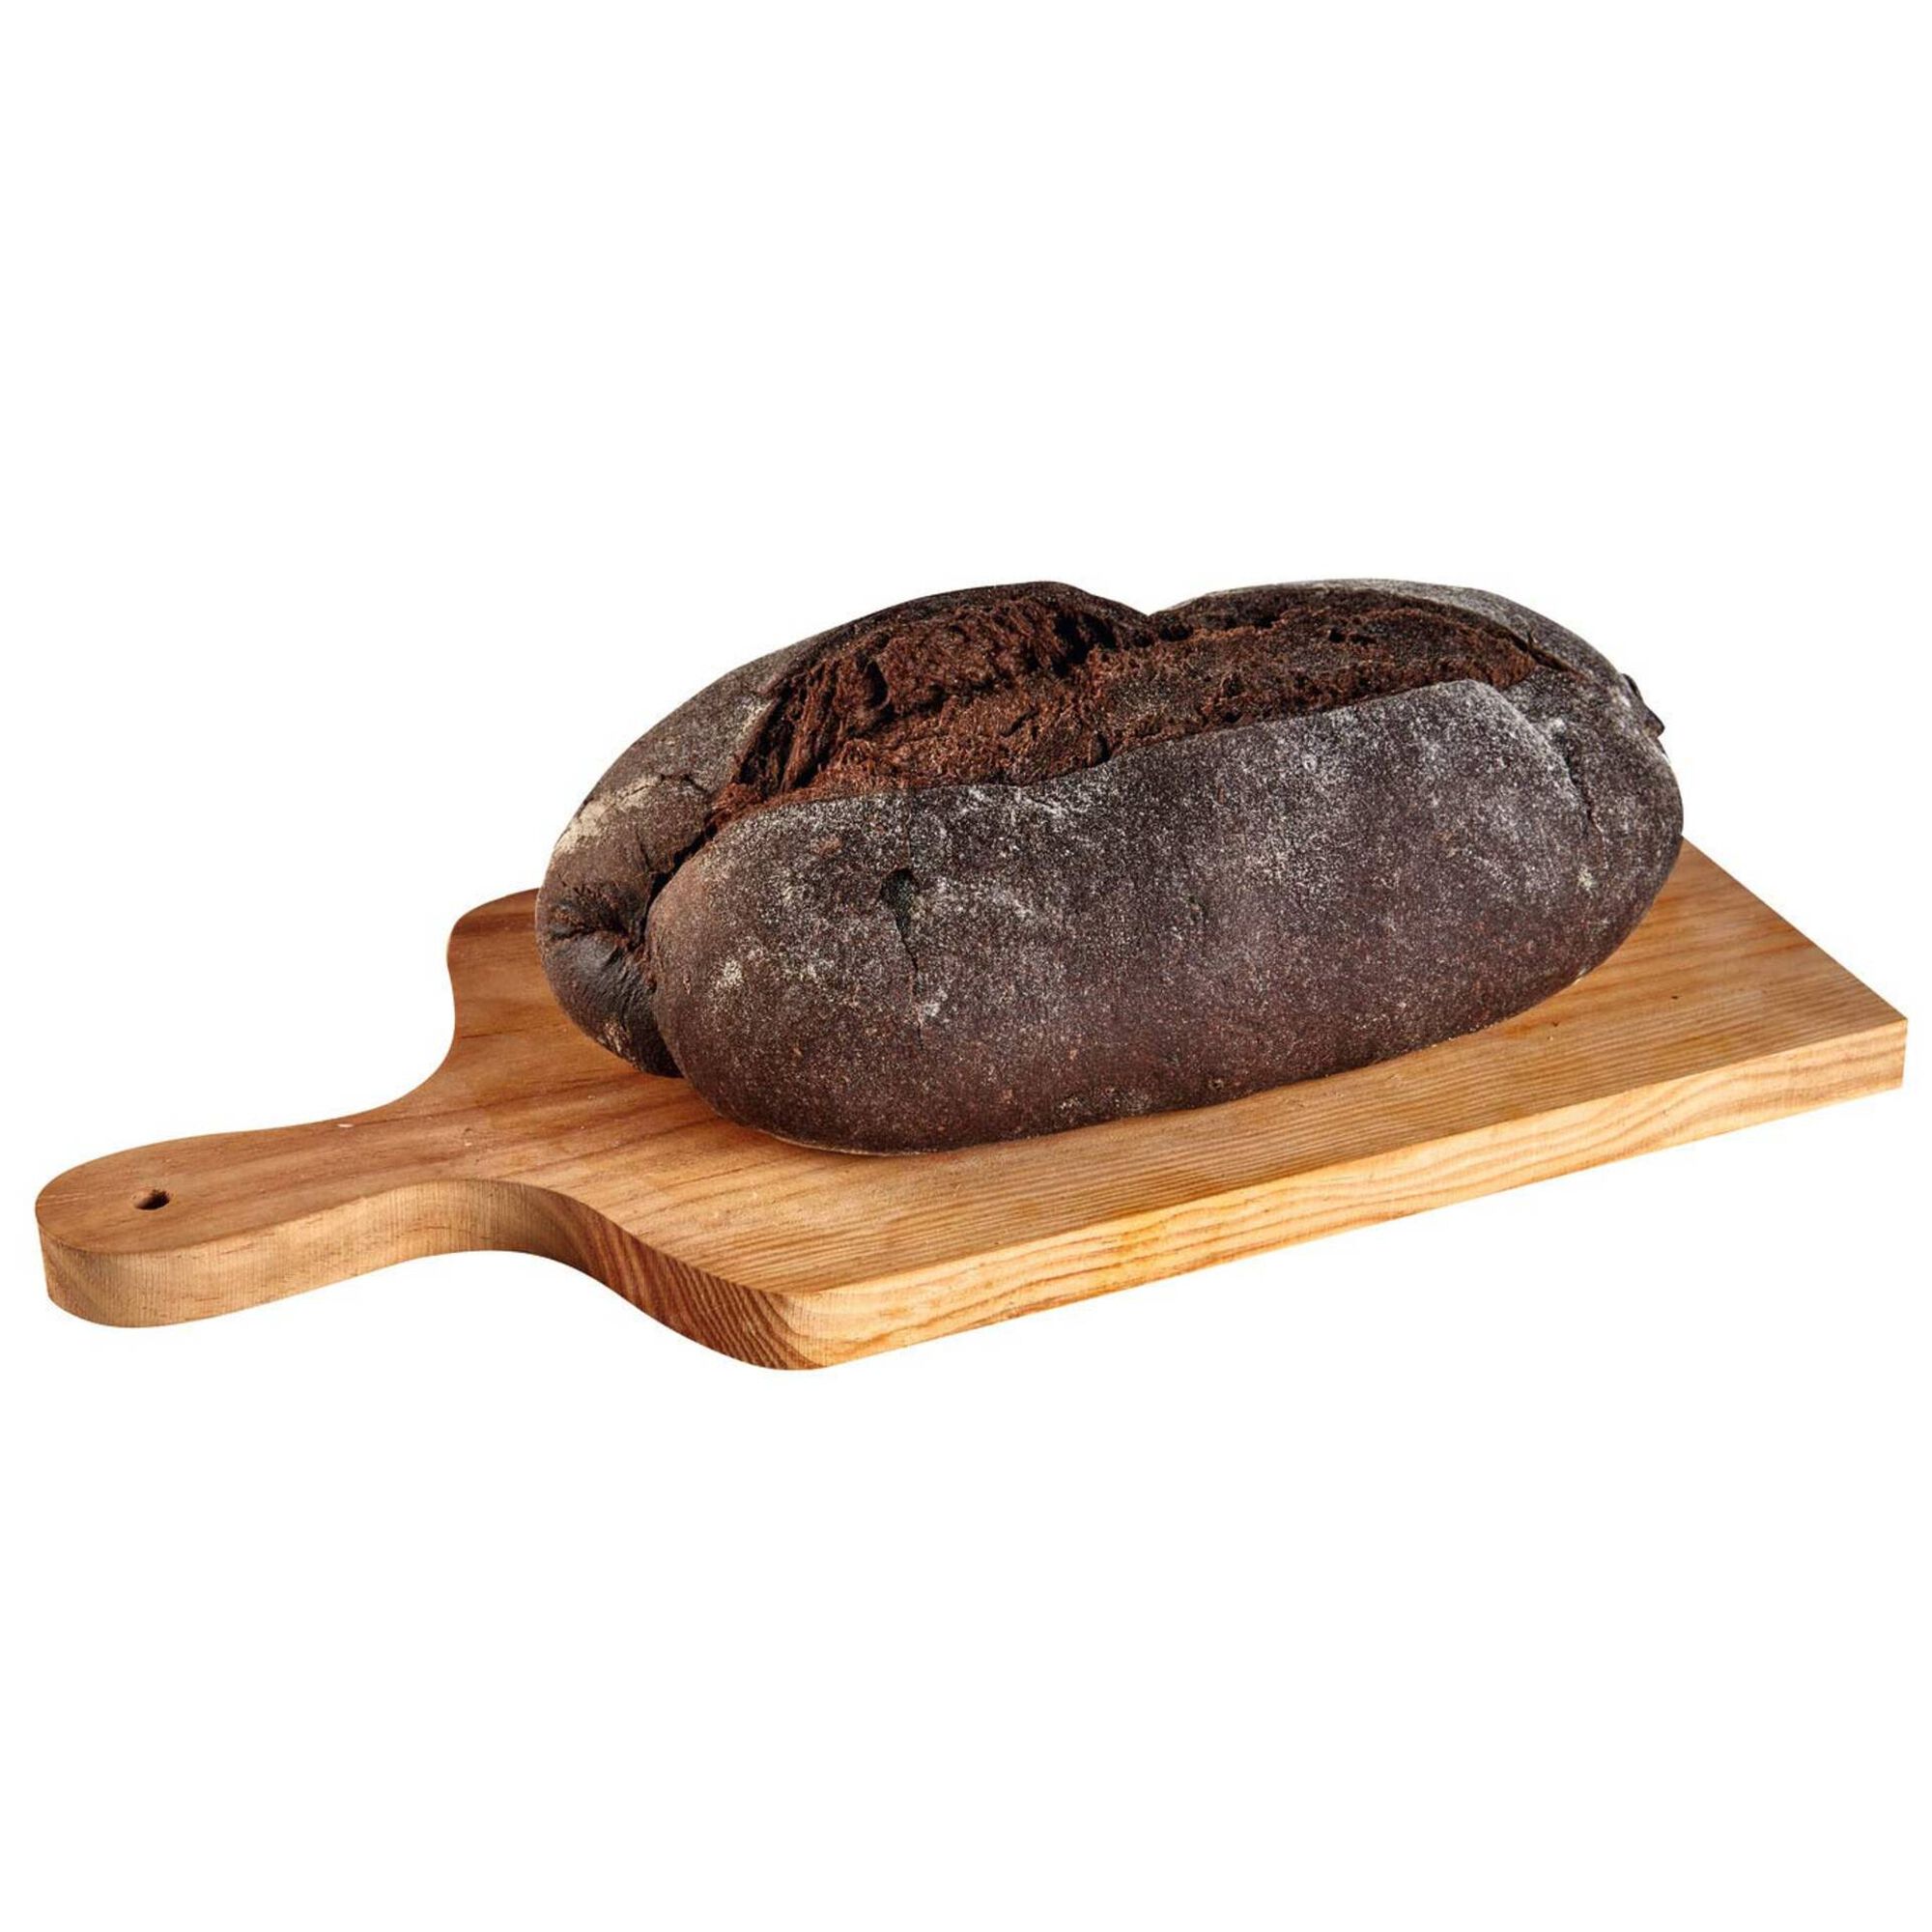 Pão de Alfarroba